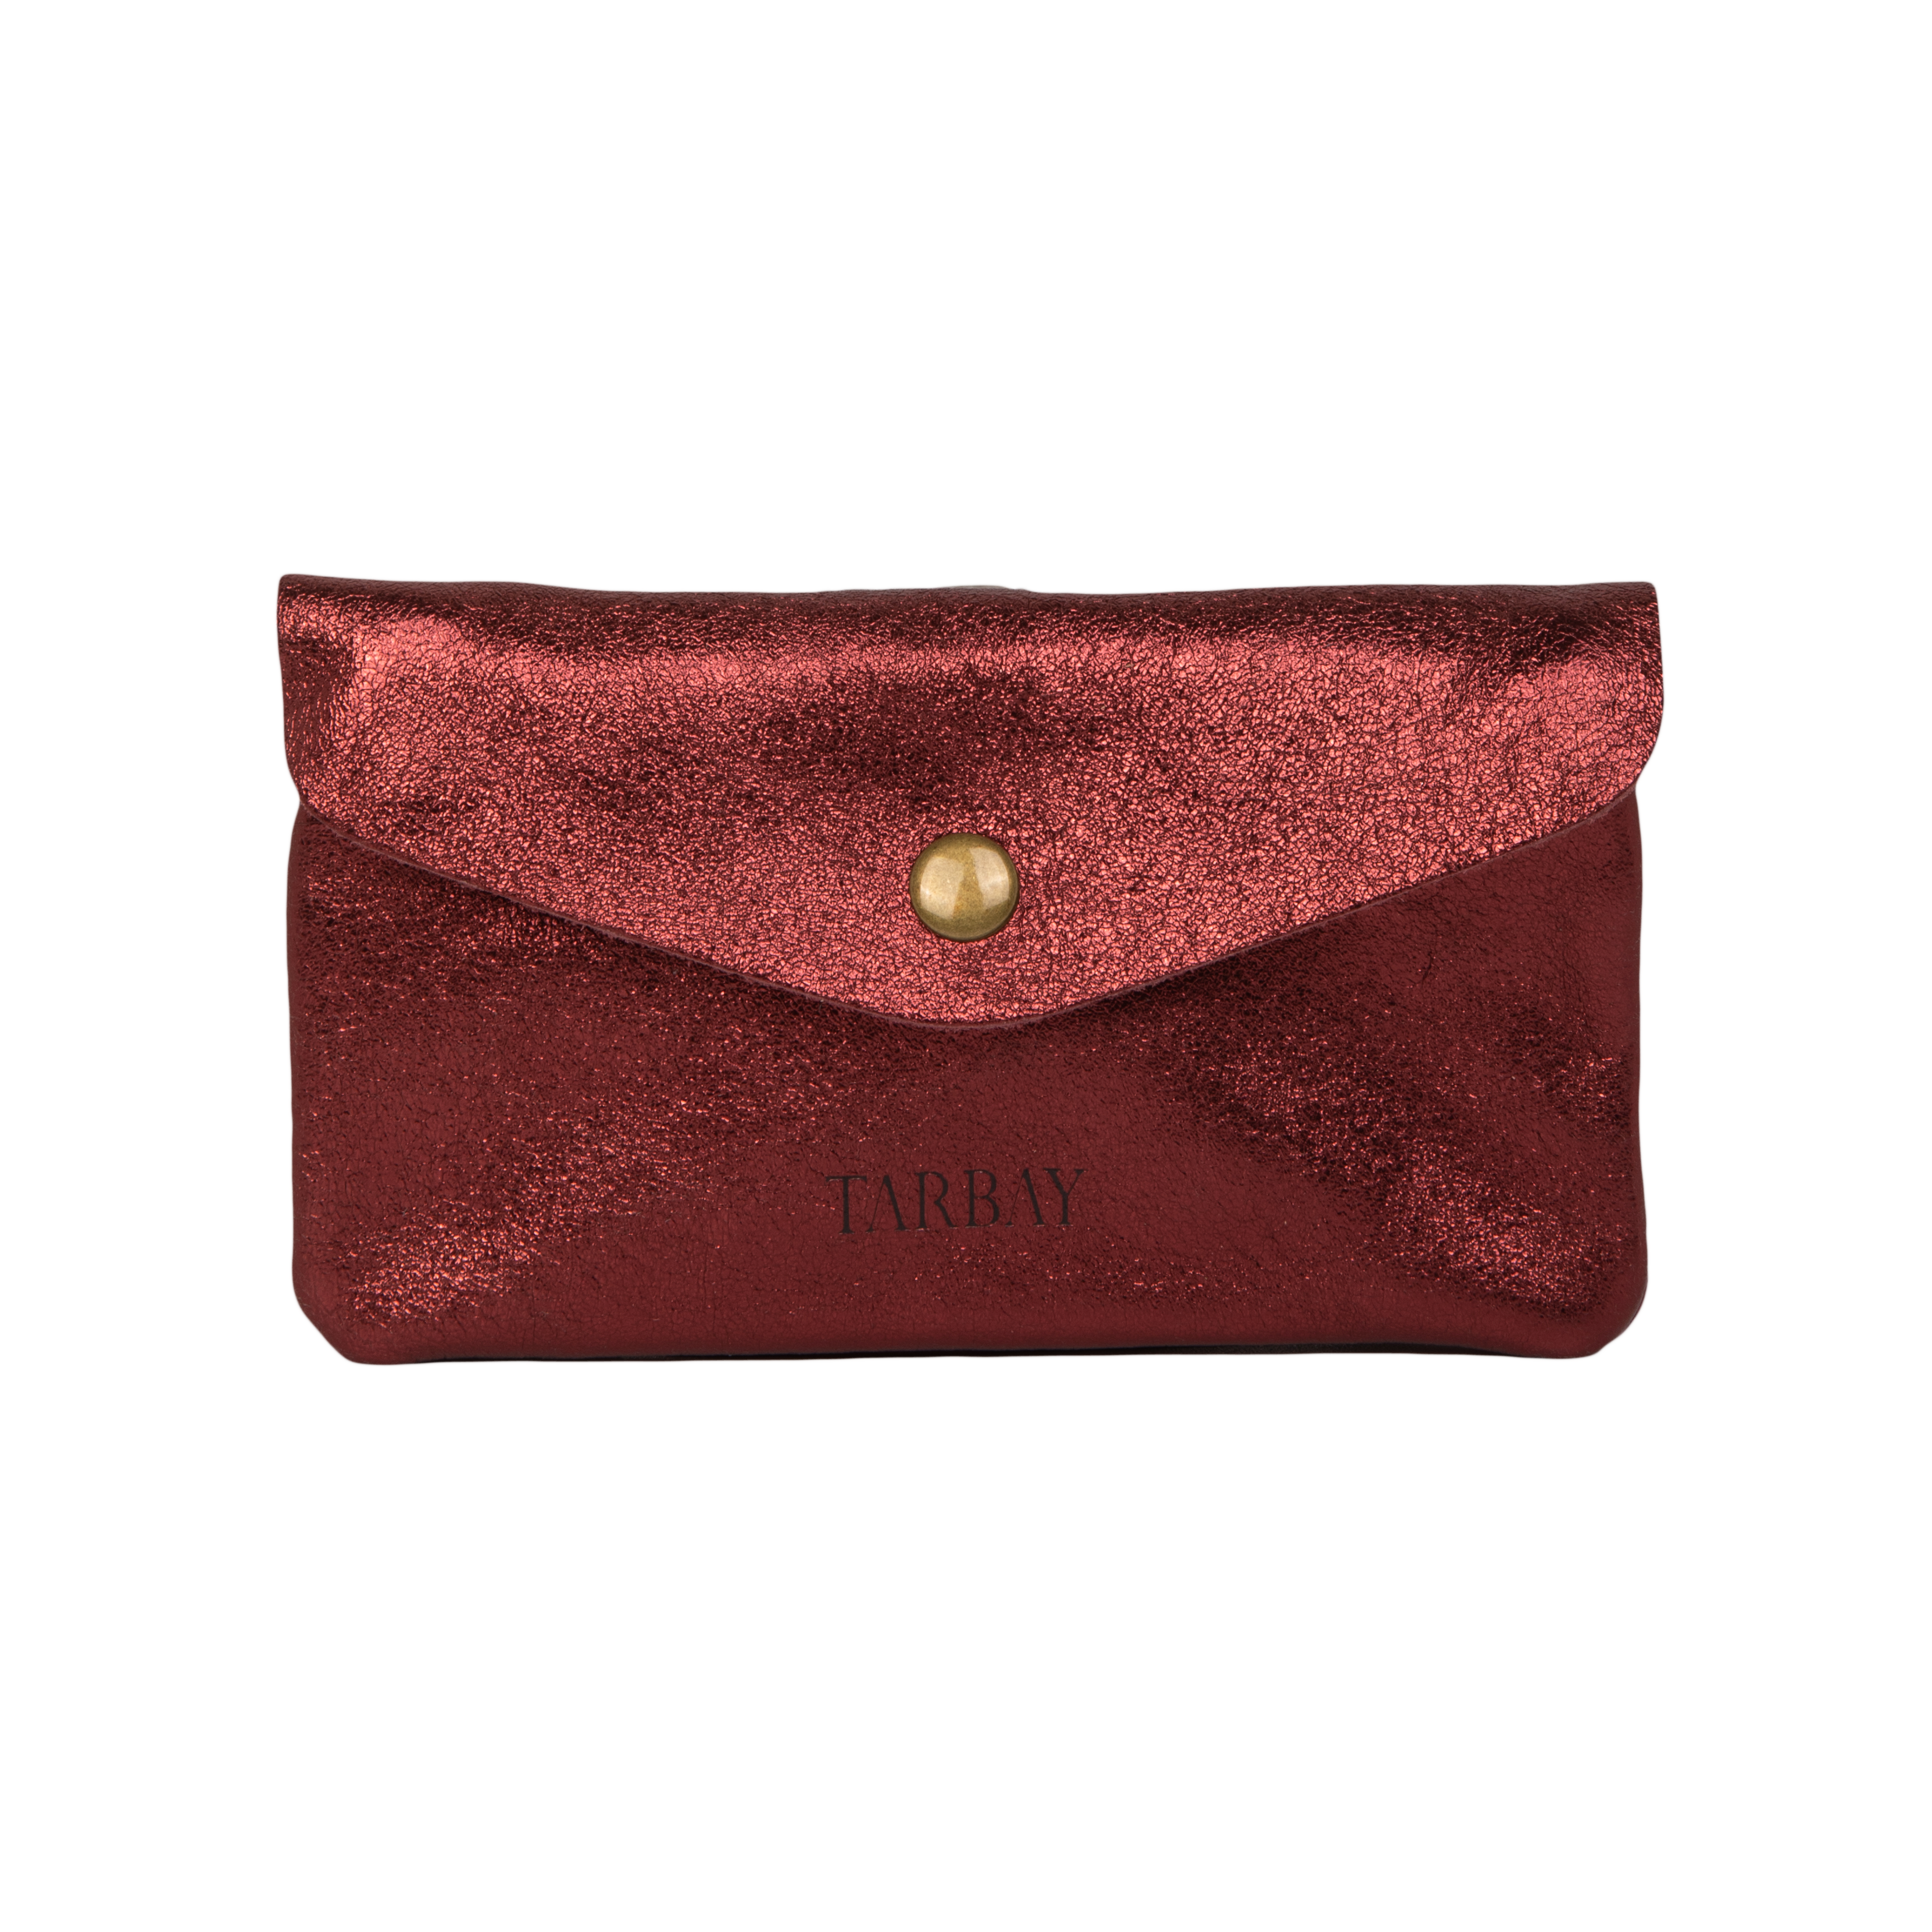 Blair Genuine Leather Wallet #2 - Metallic Red Wallets TARBAY   